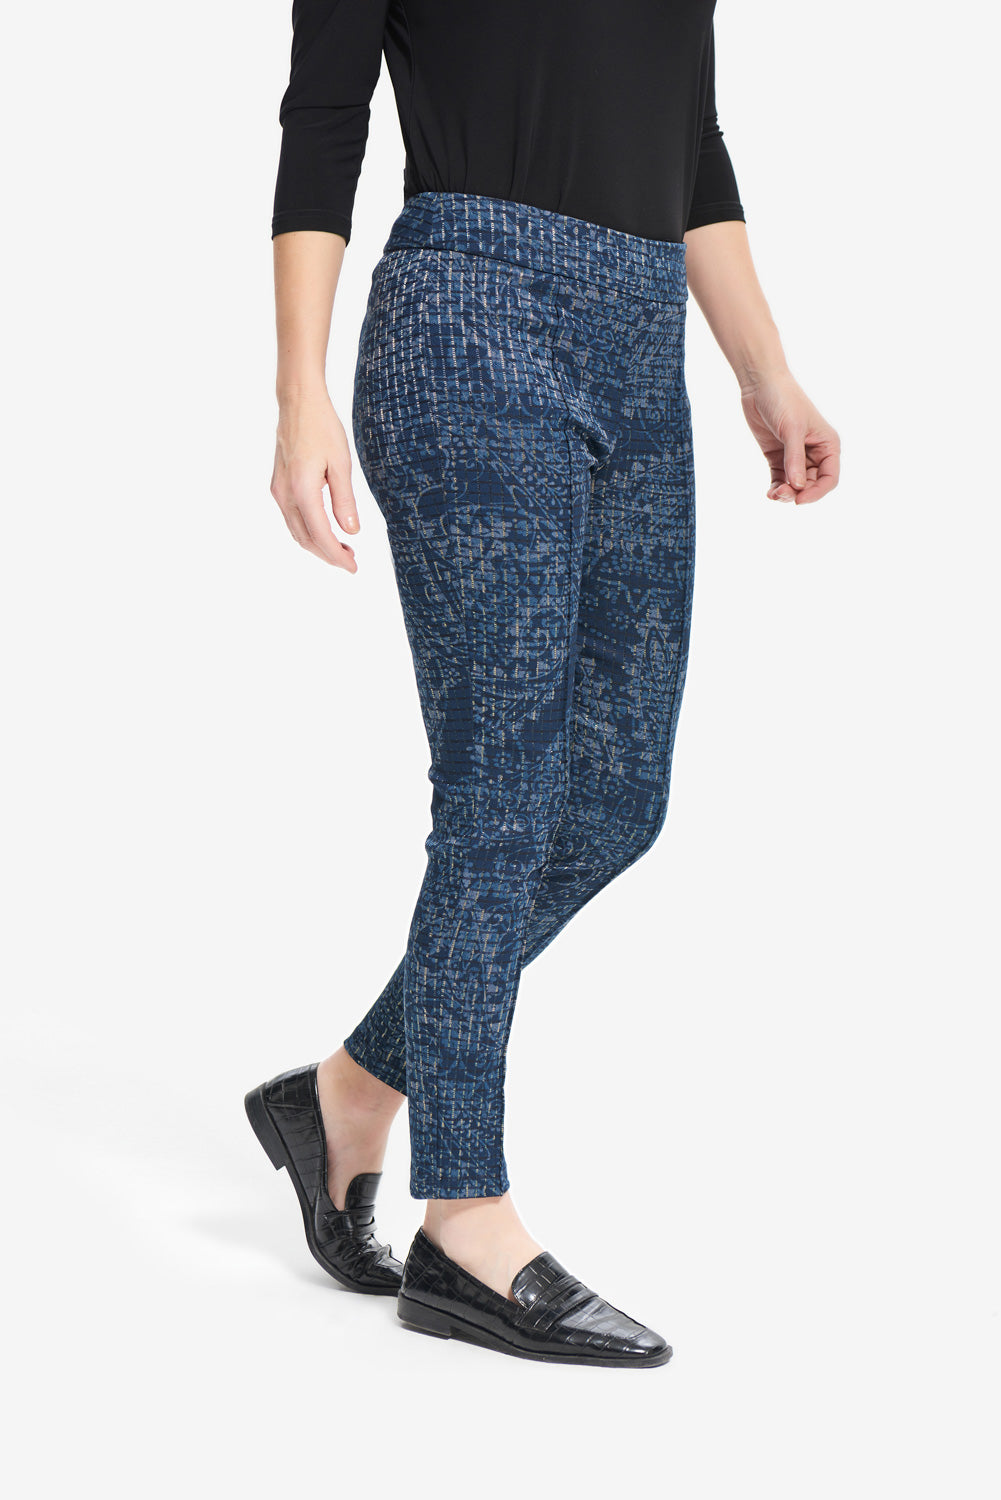 Joseph Ribkoff Blue-Multi Pants Style 214101